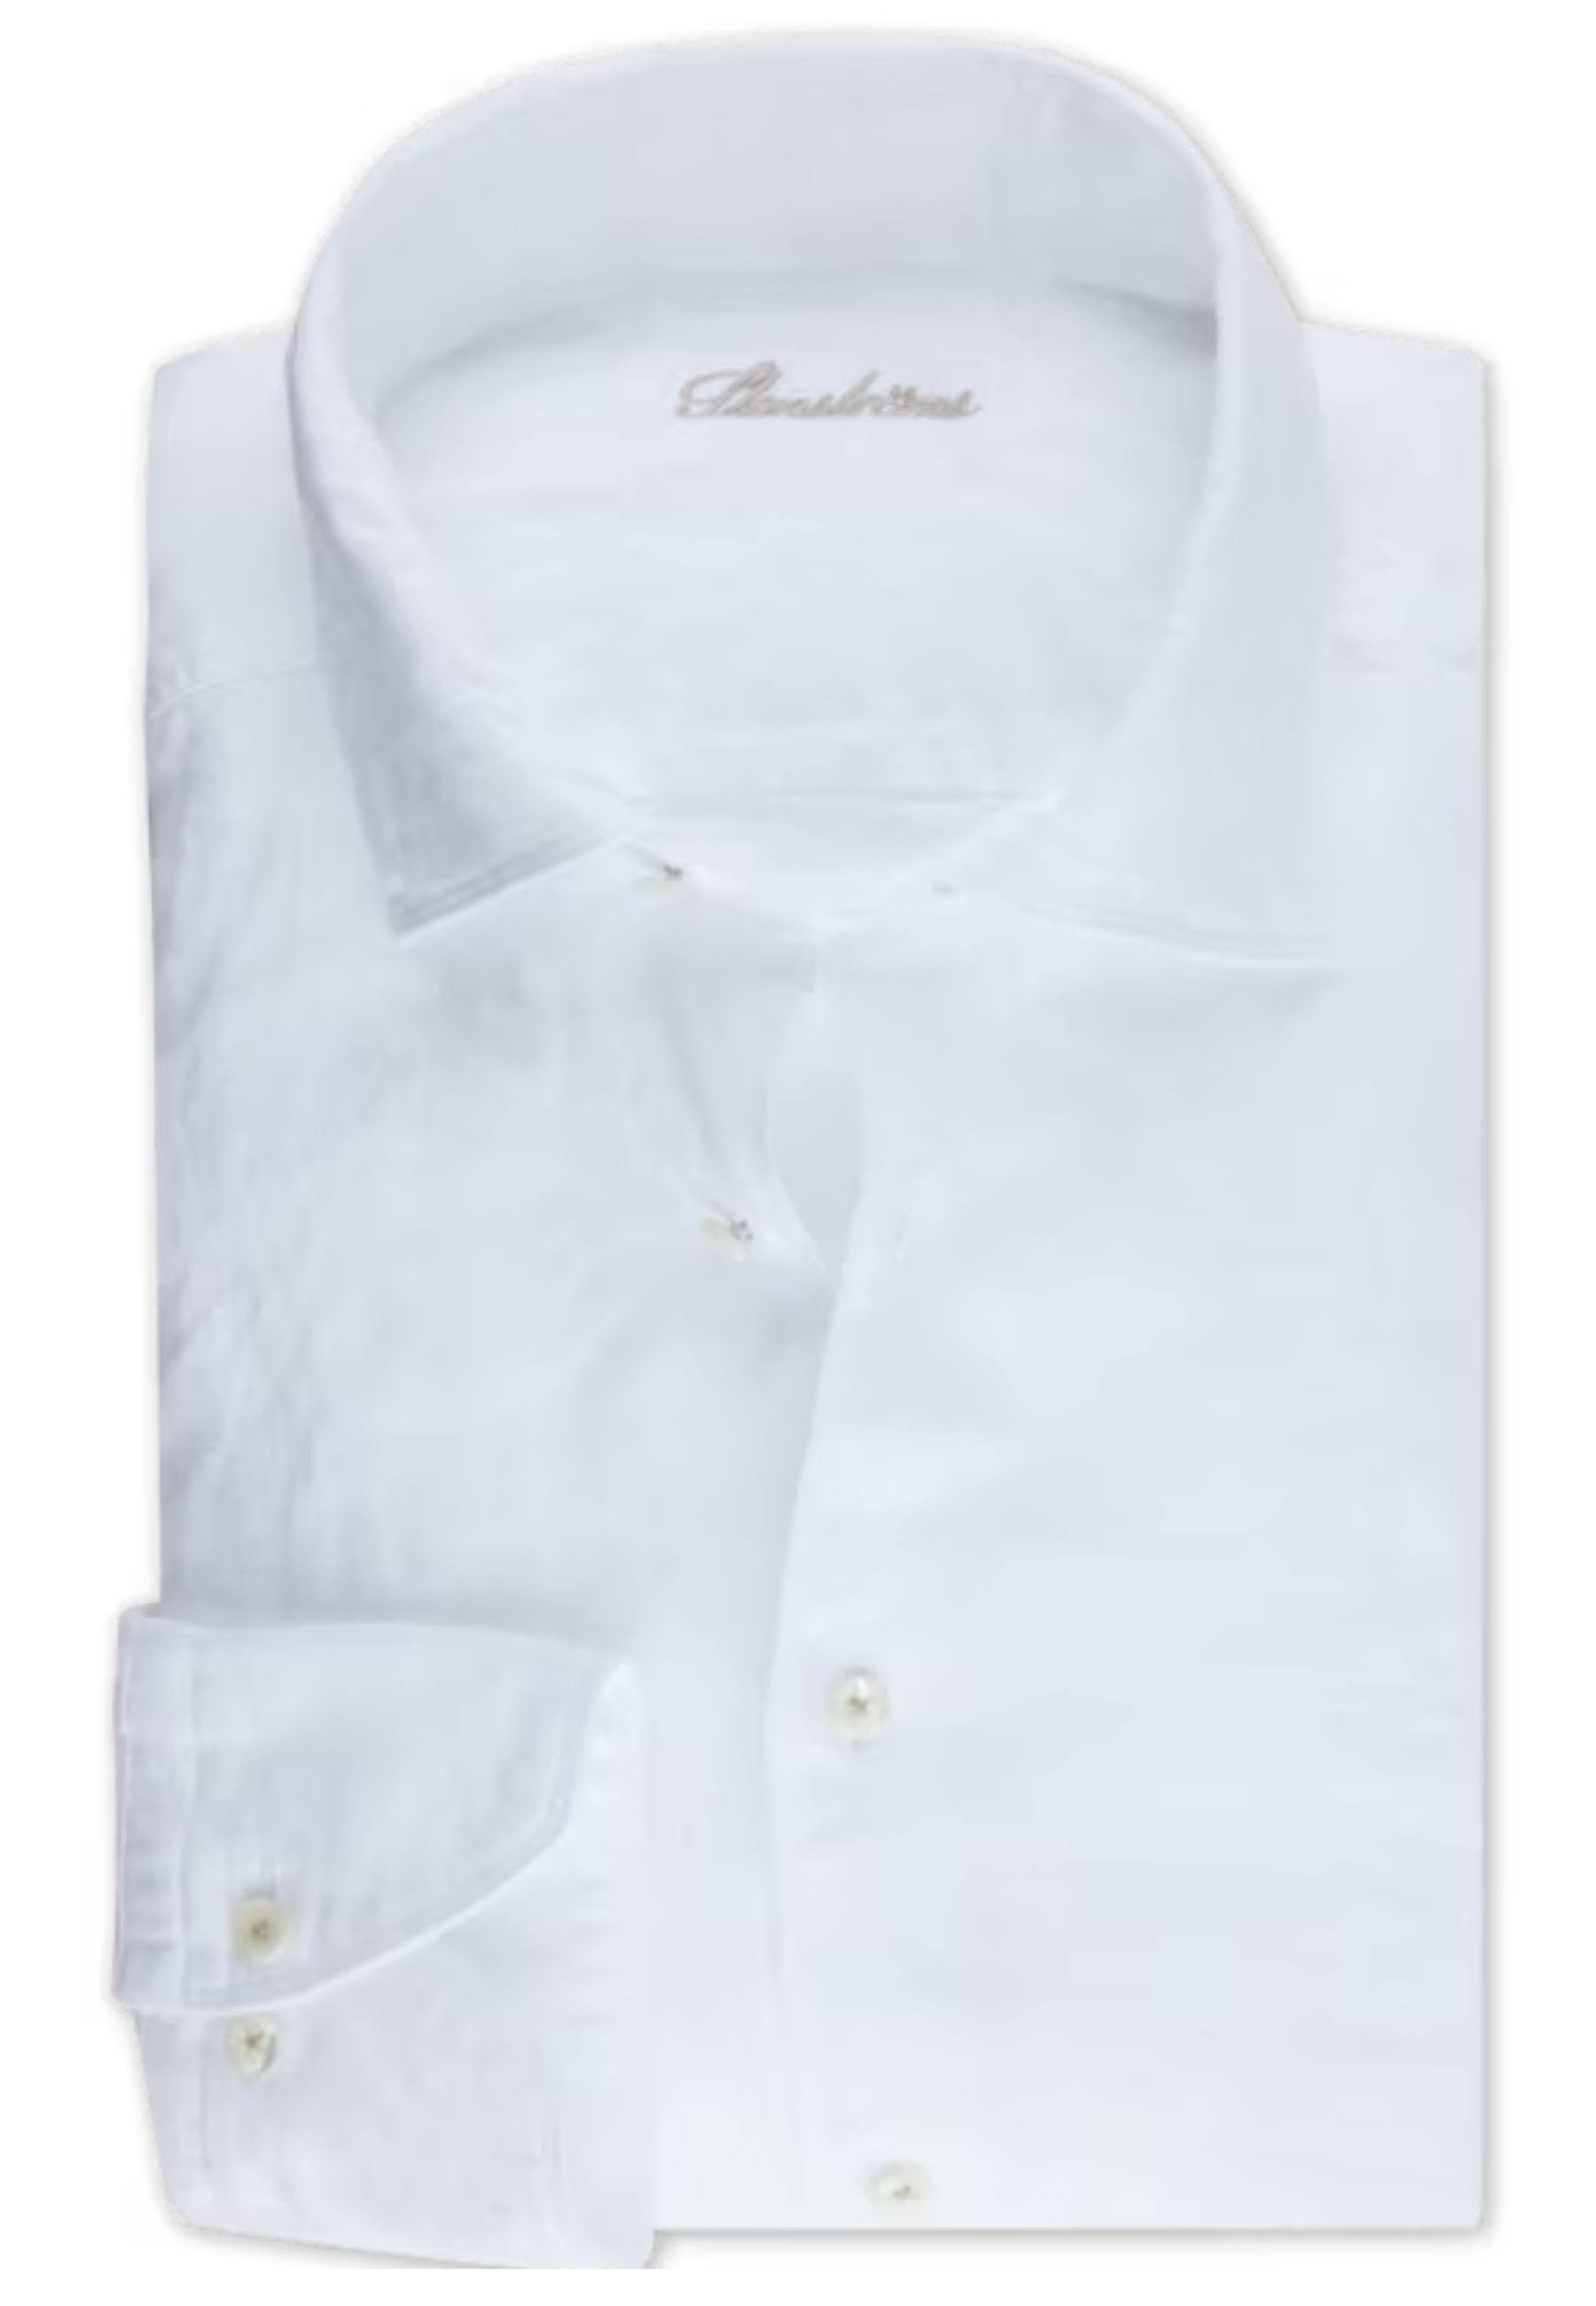 Overhemd Wit Slimline c72 rc lange mouw overhemden wit